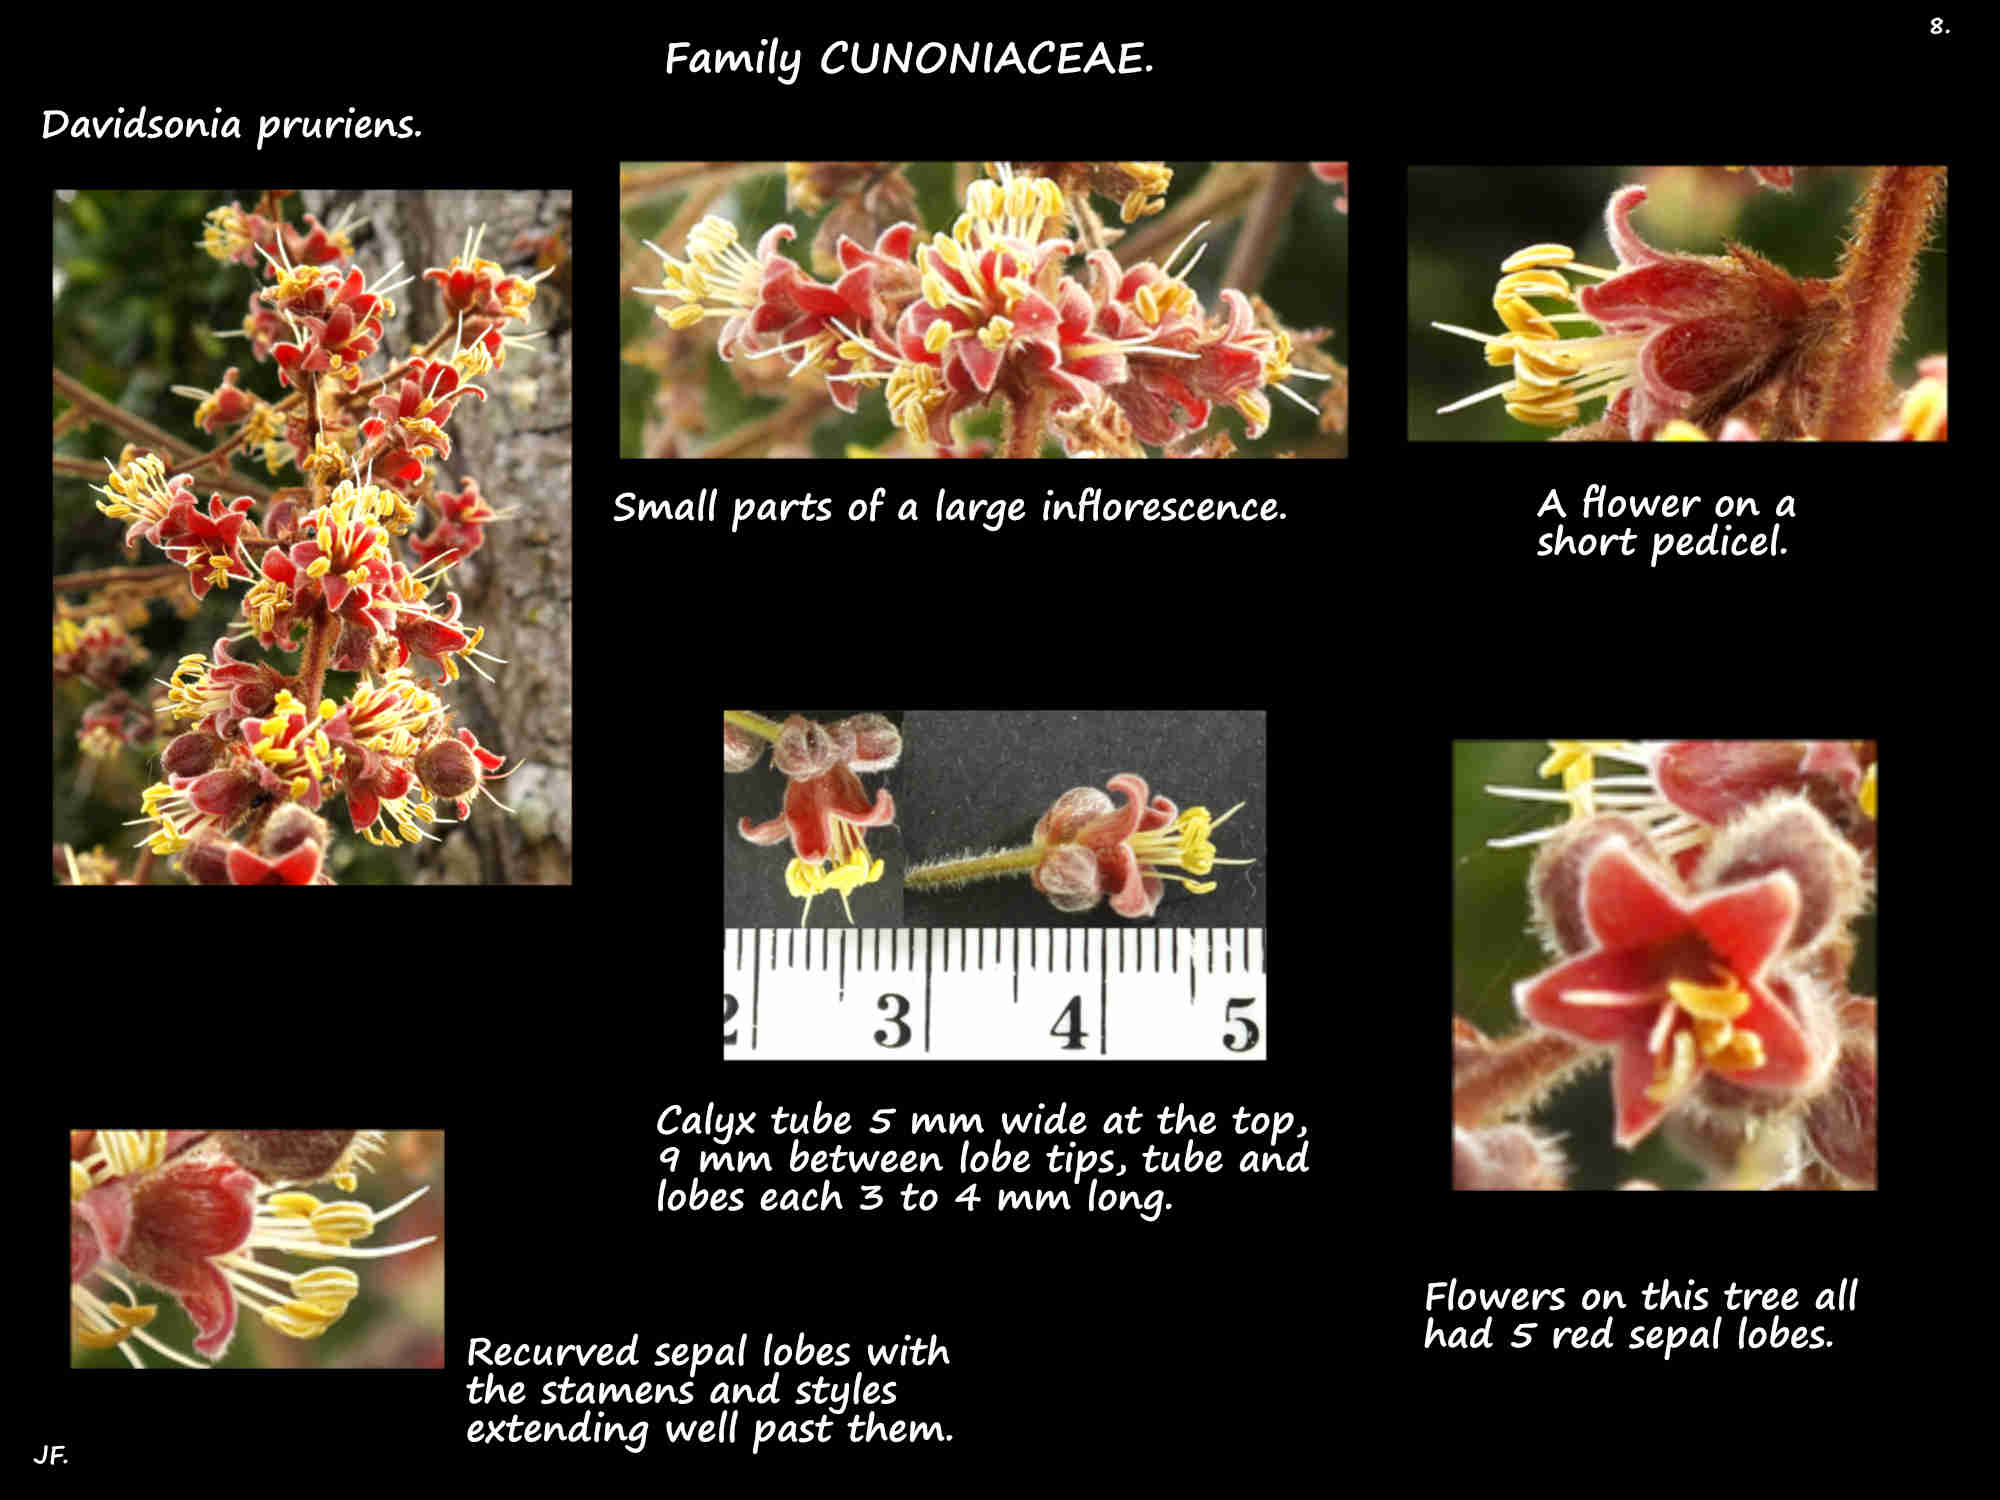 8 Davidsonia pruriens flowers